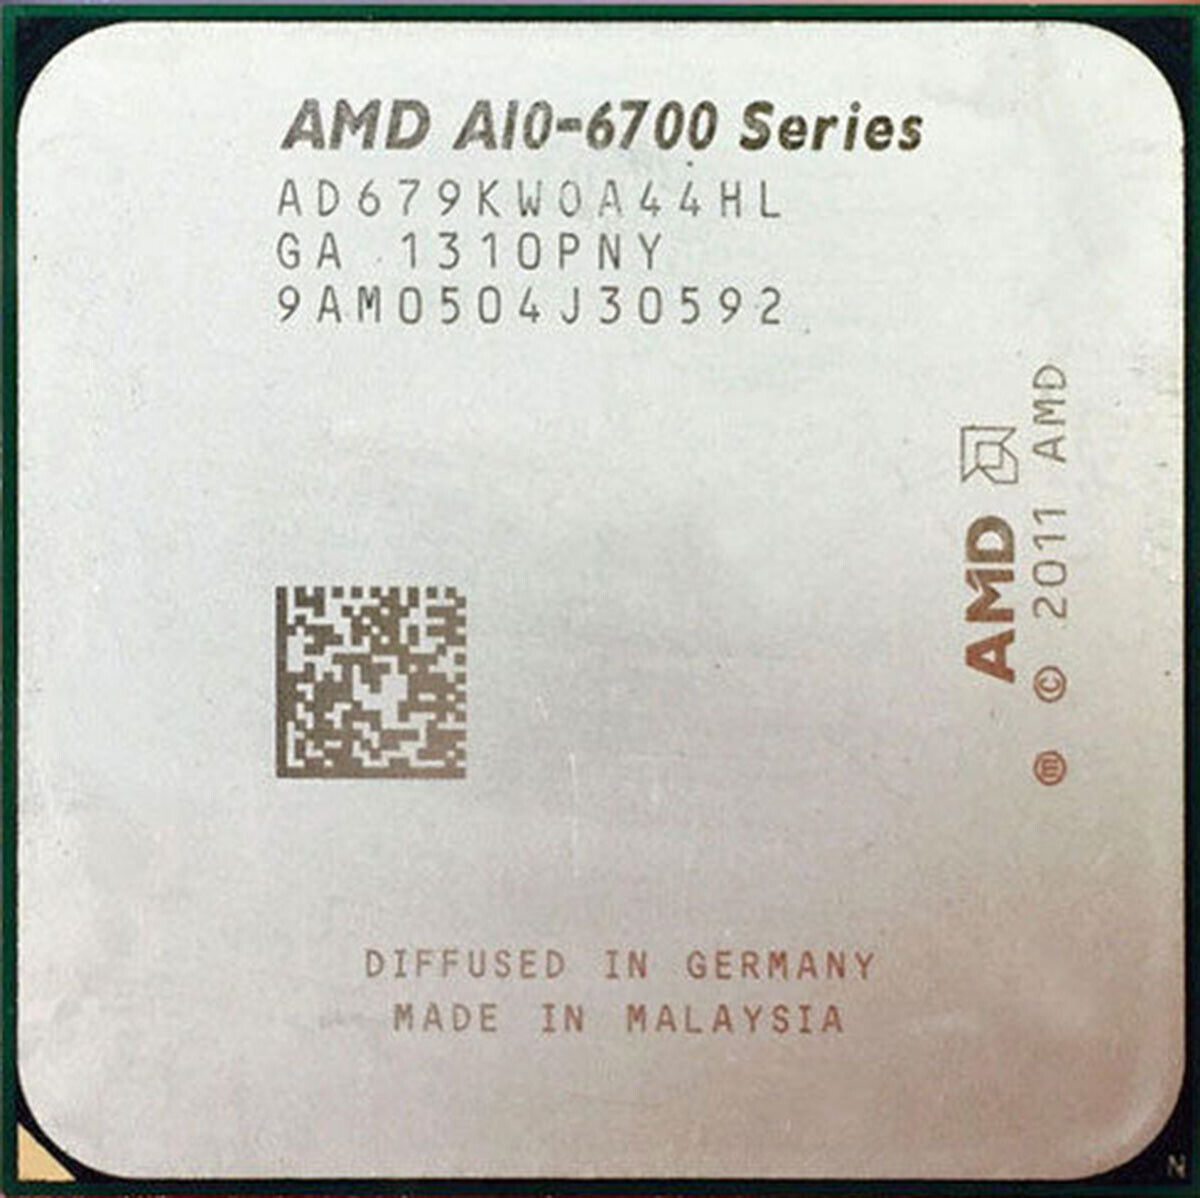 AMD a10-6790k CPU series quad-core 4mb 4.0ghz interface fm2 100w processor